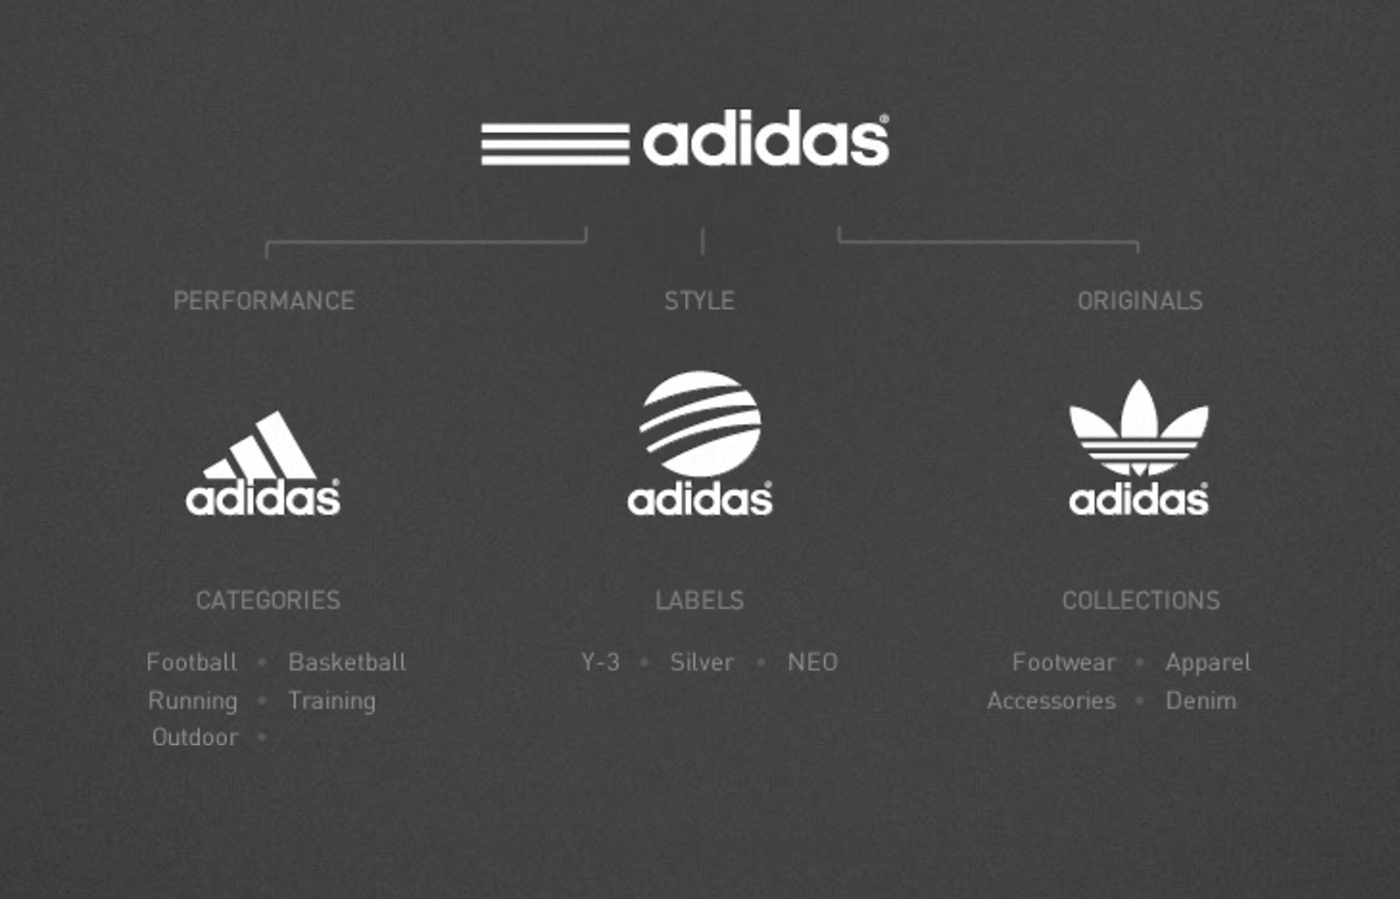 the brand adidas